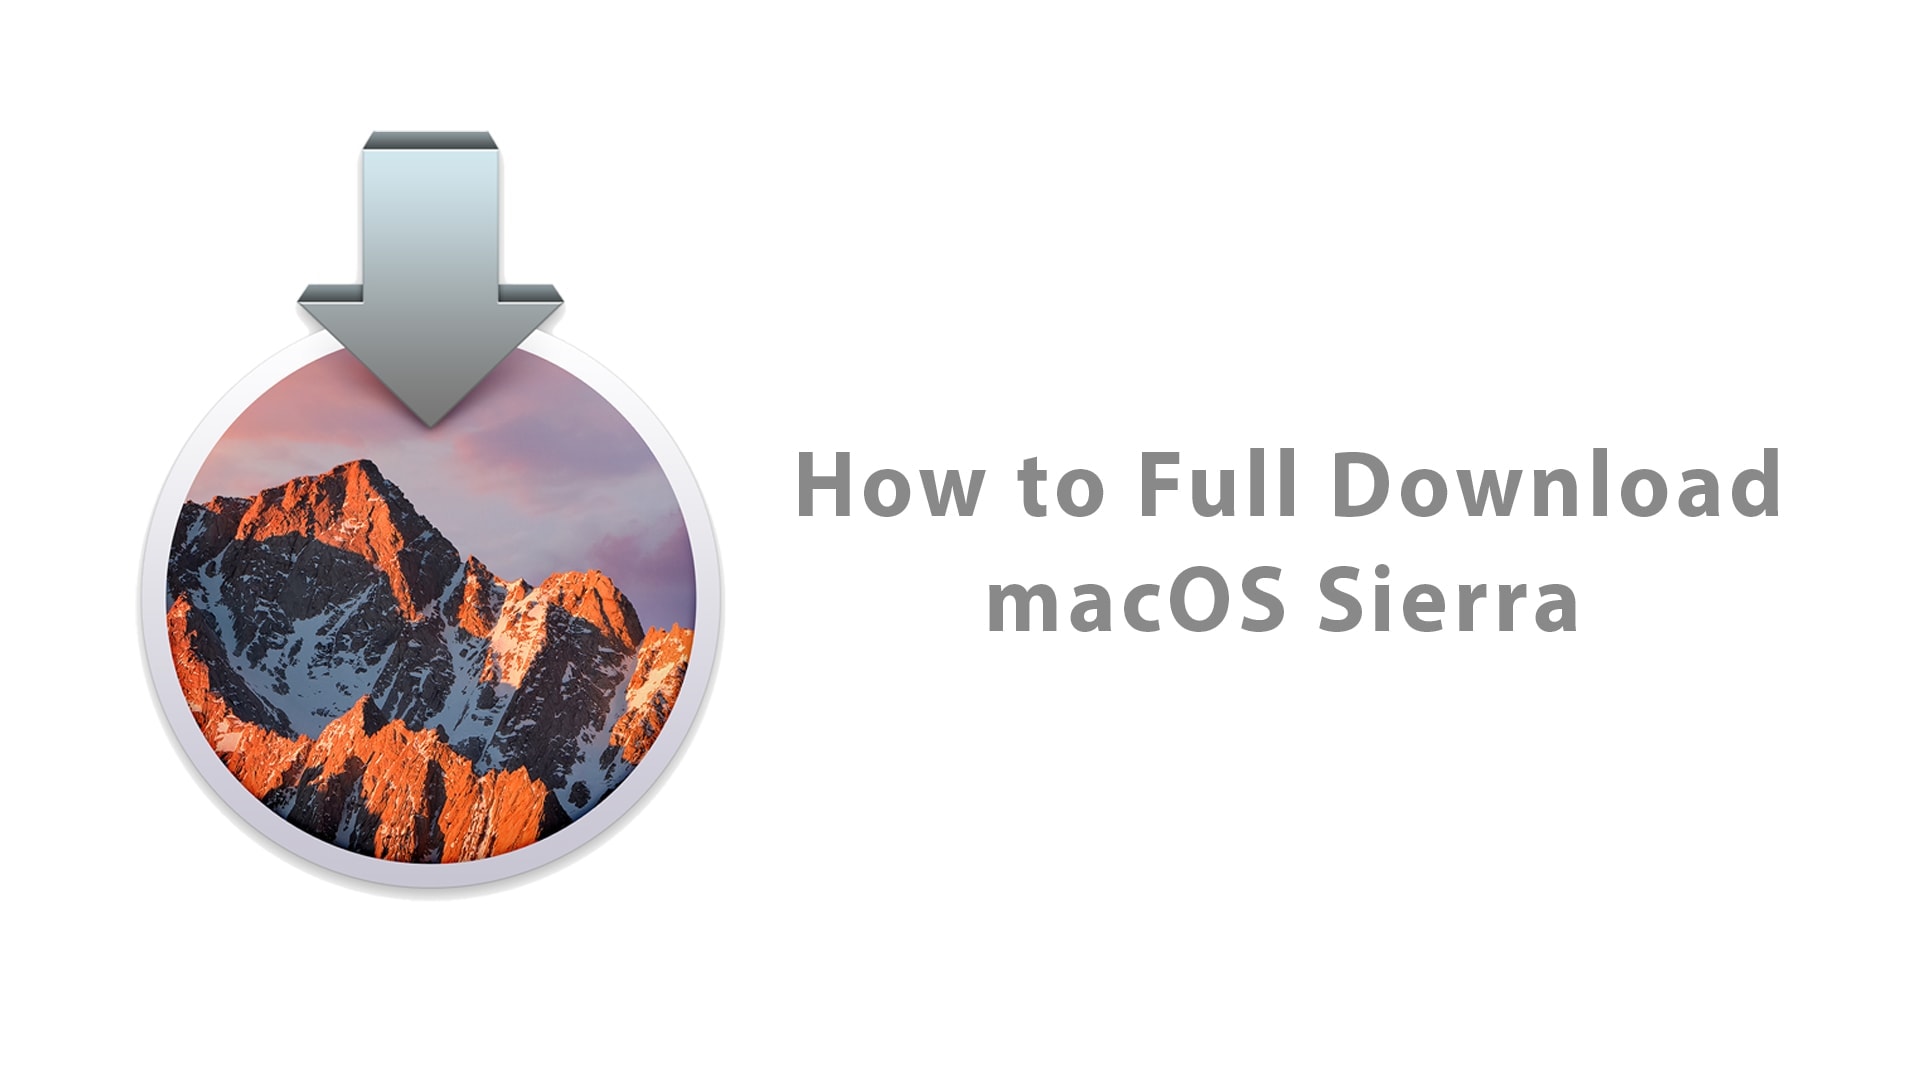 mac os sierra dmg file download 10.12